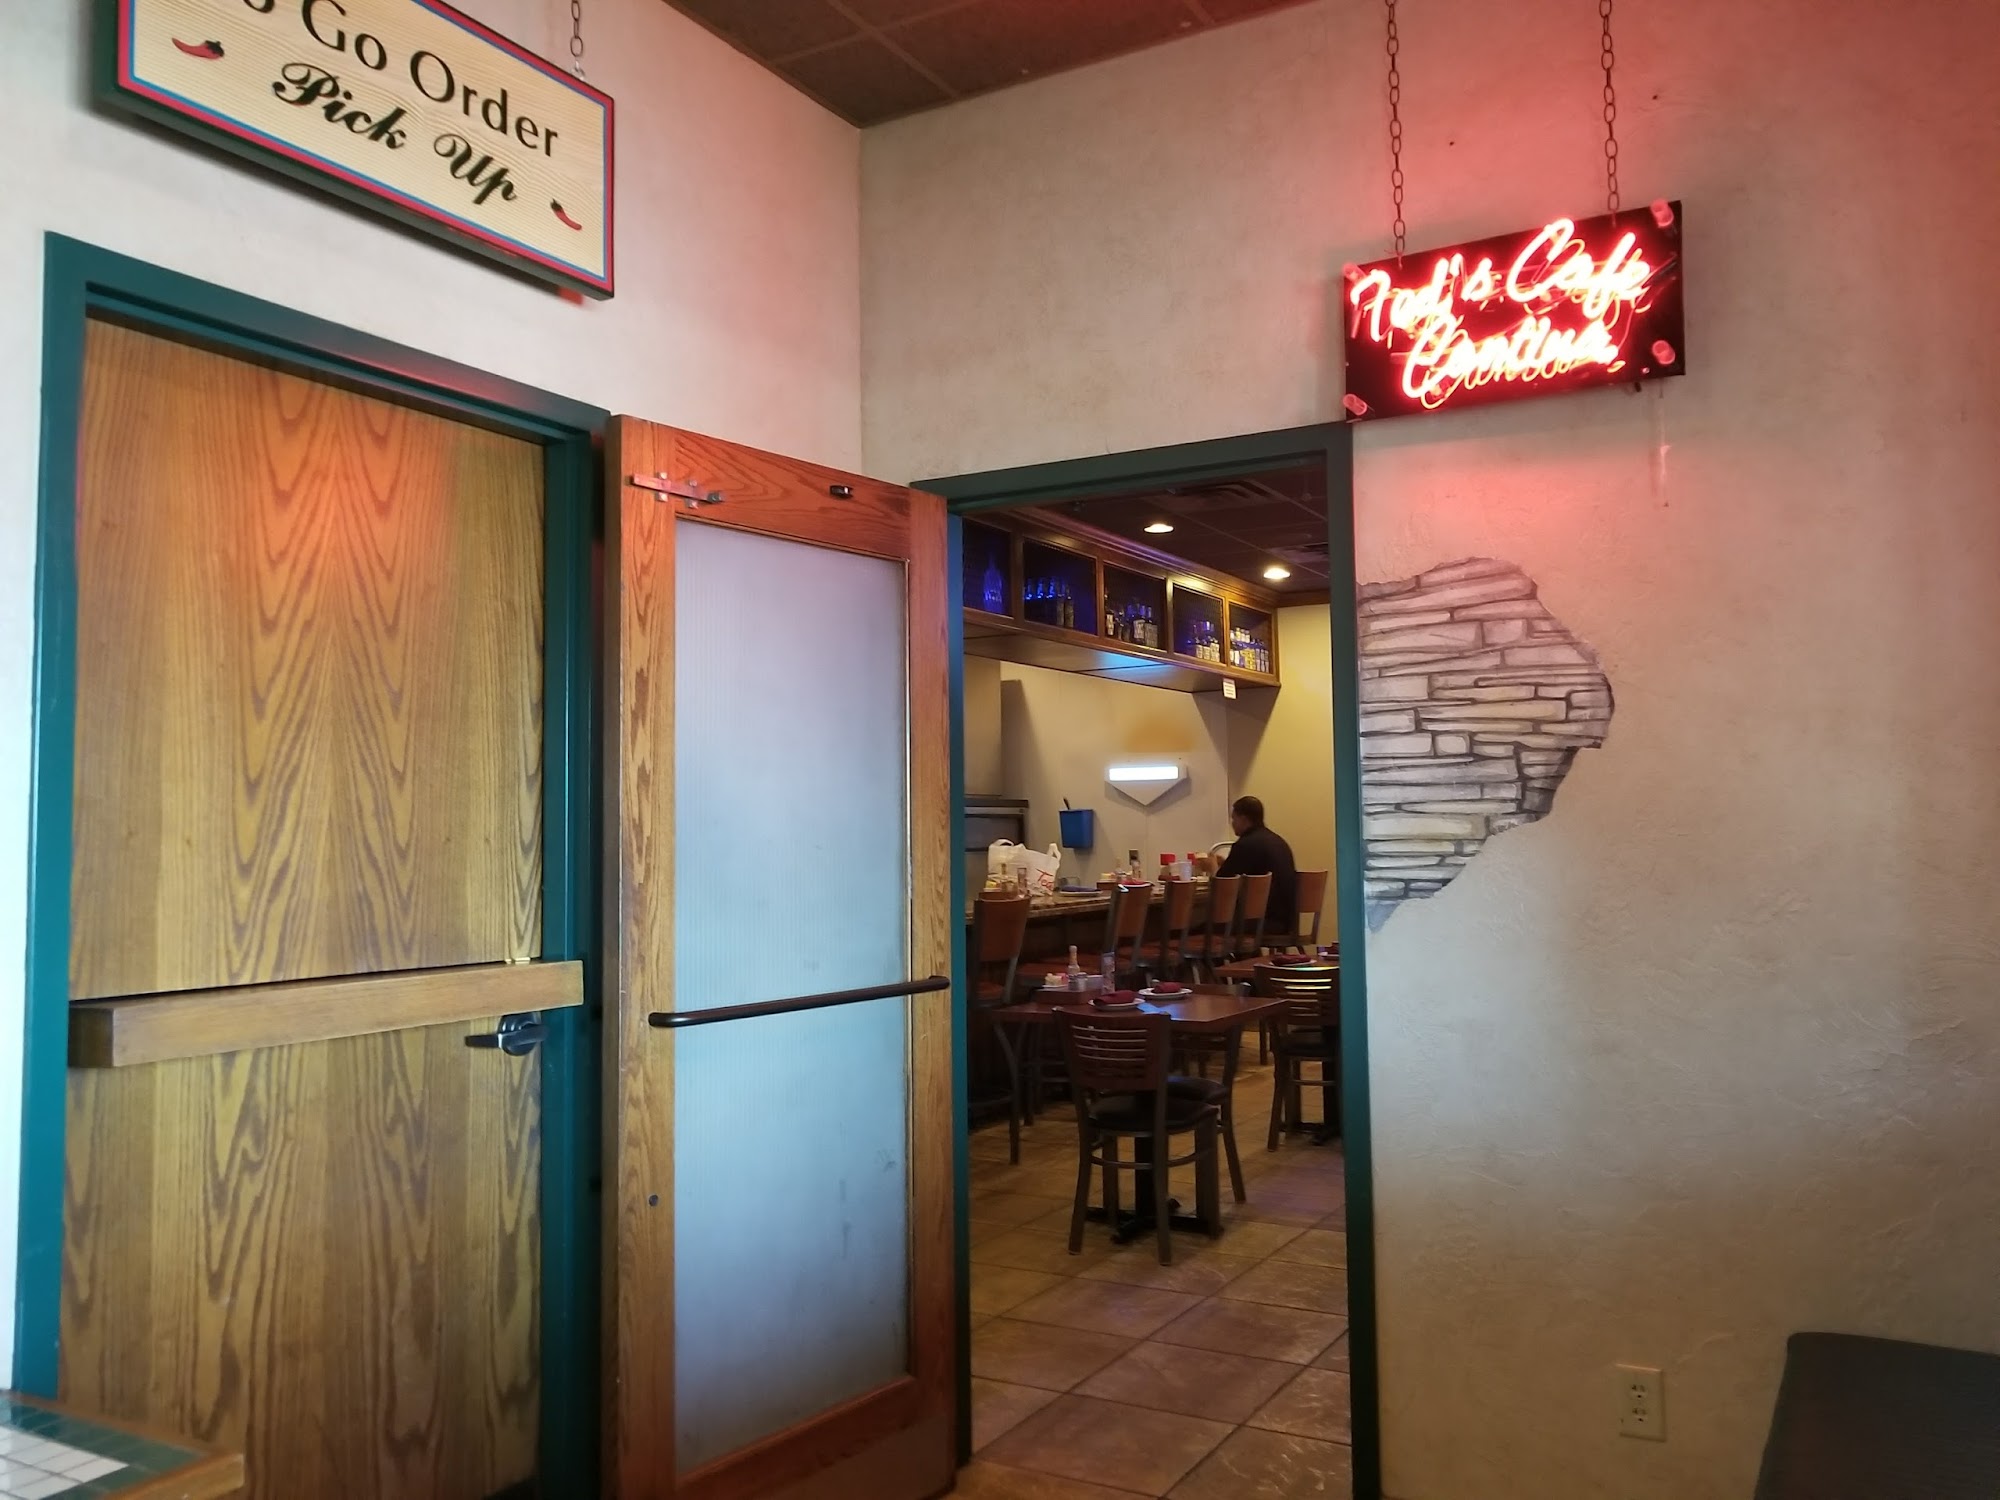 Ted's Café Escondido 700 N Interstate Dr, Norman, OK 73072